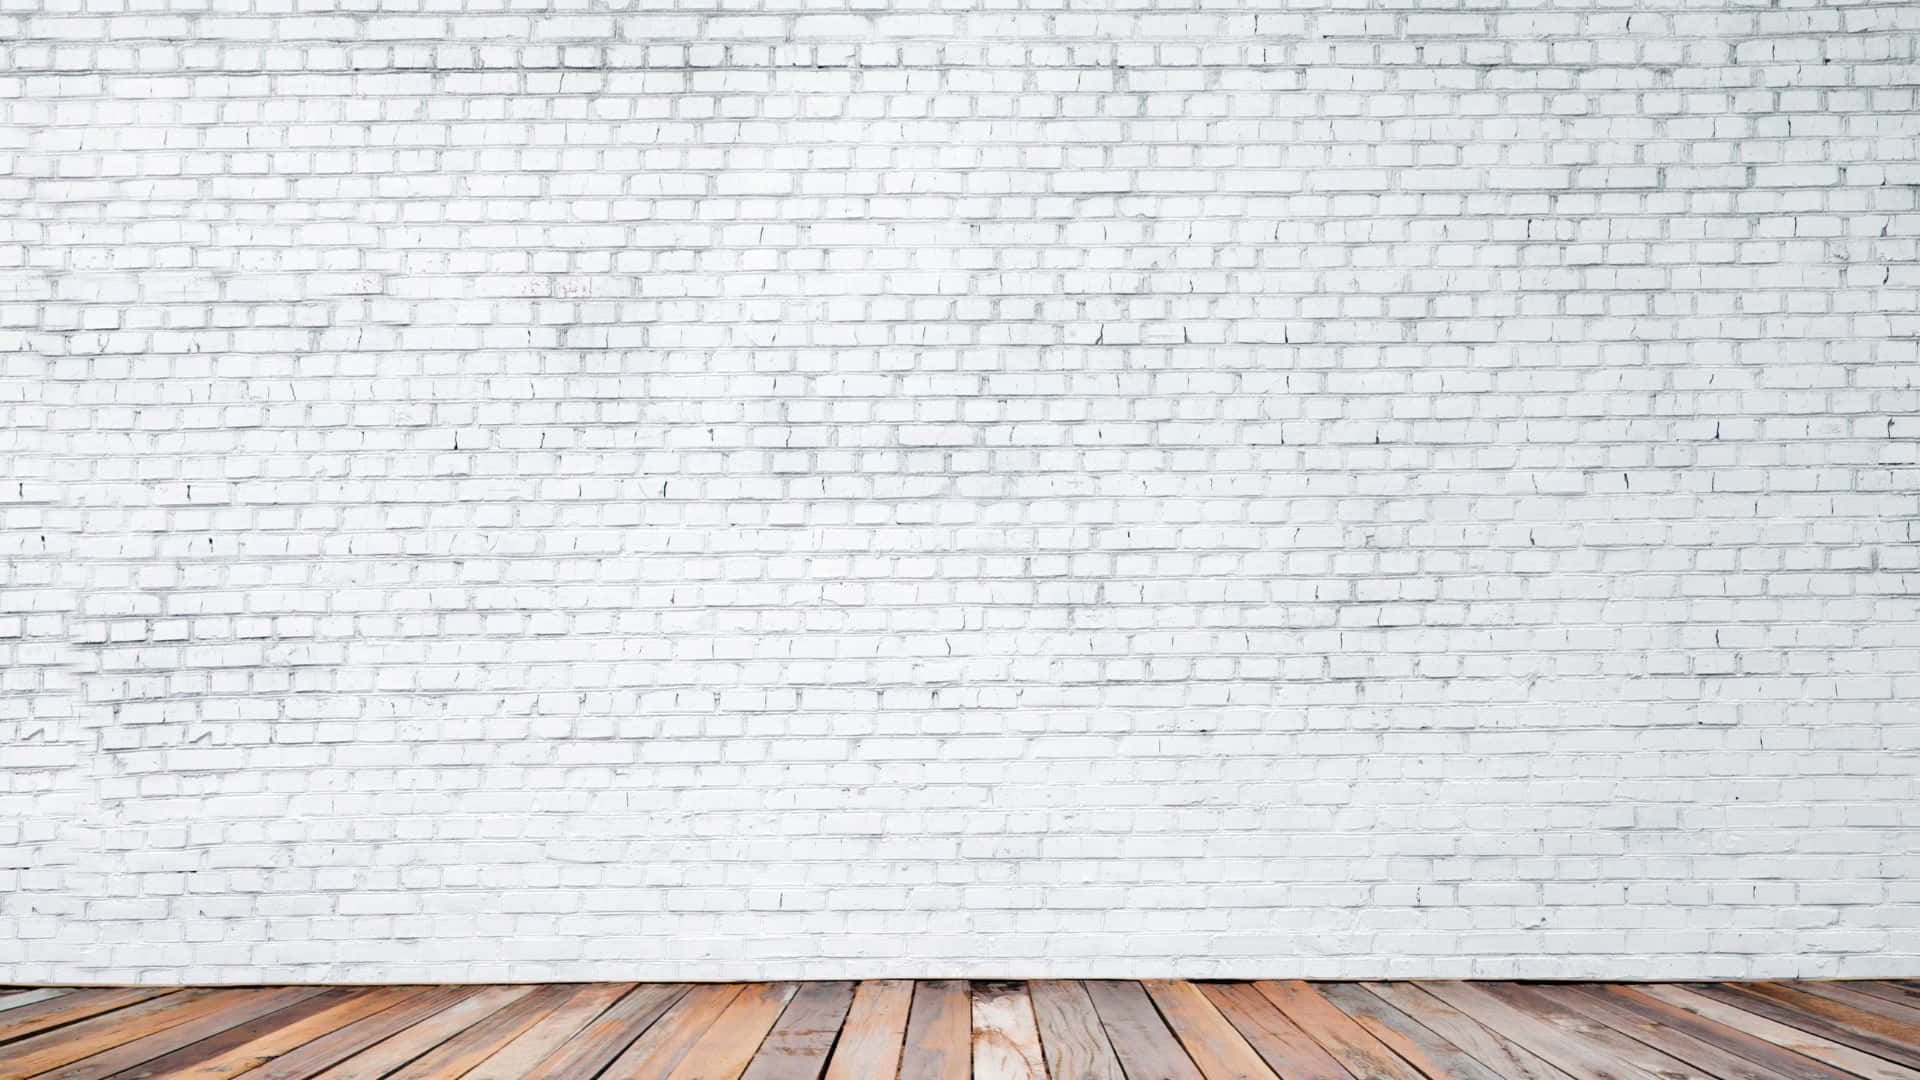 Rustic White Brick Wall